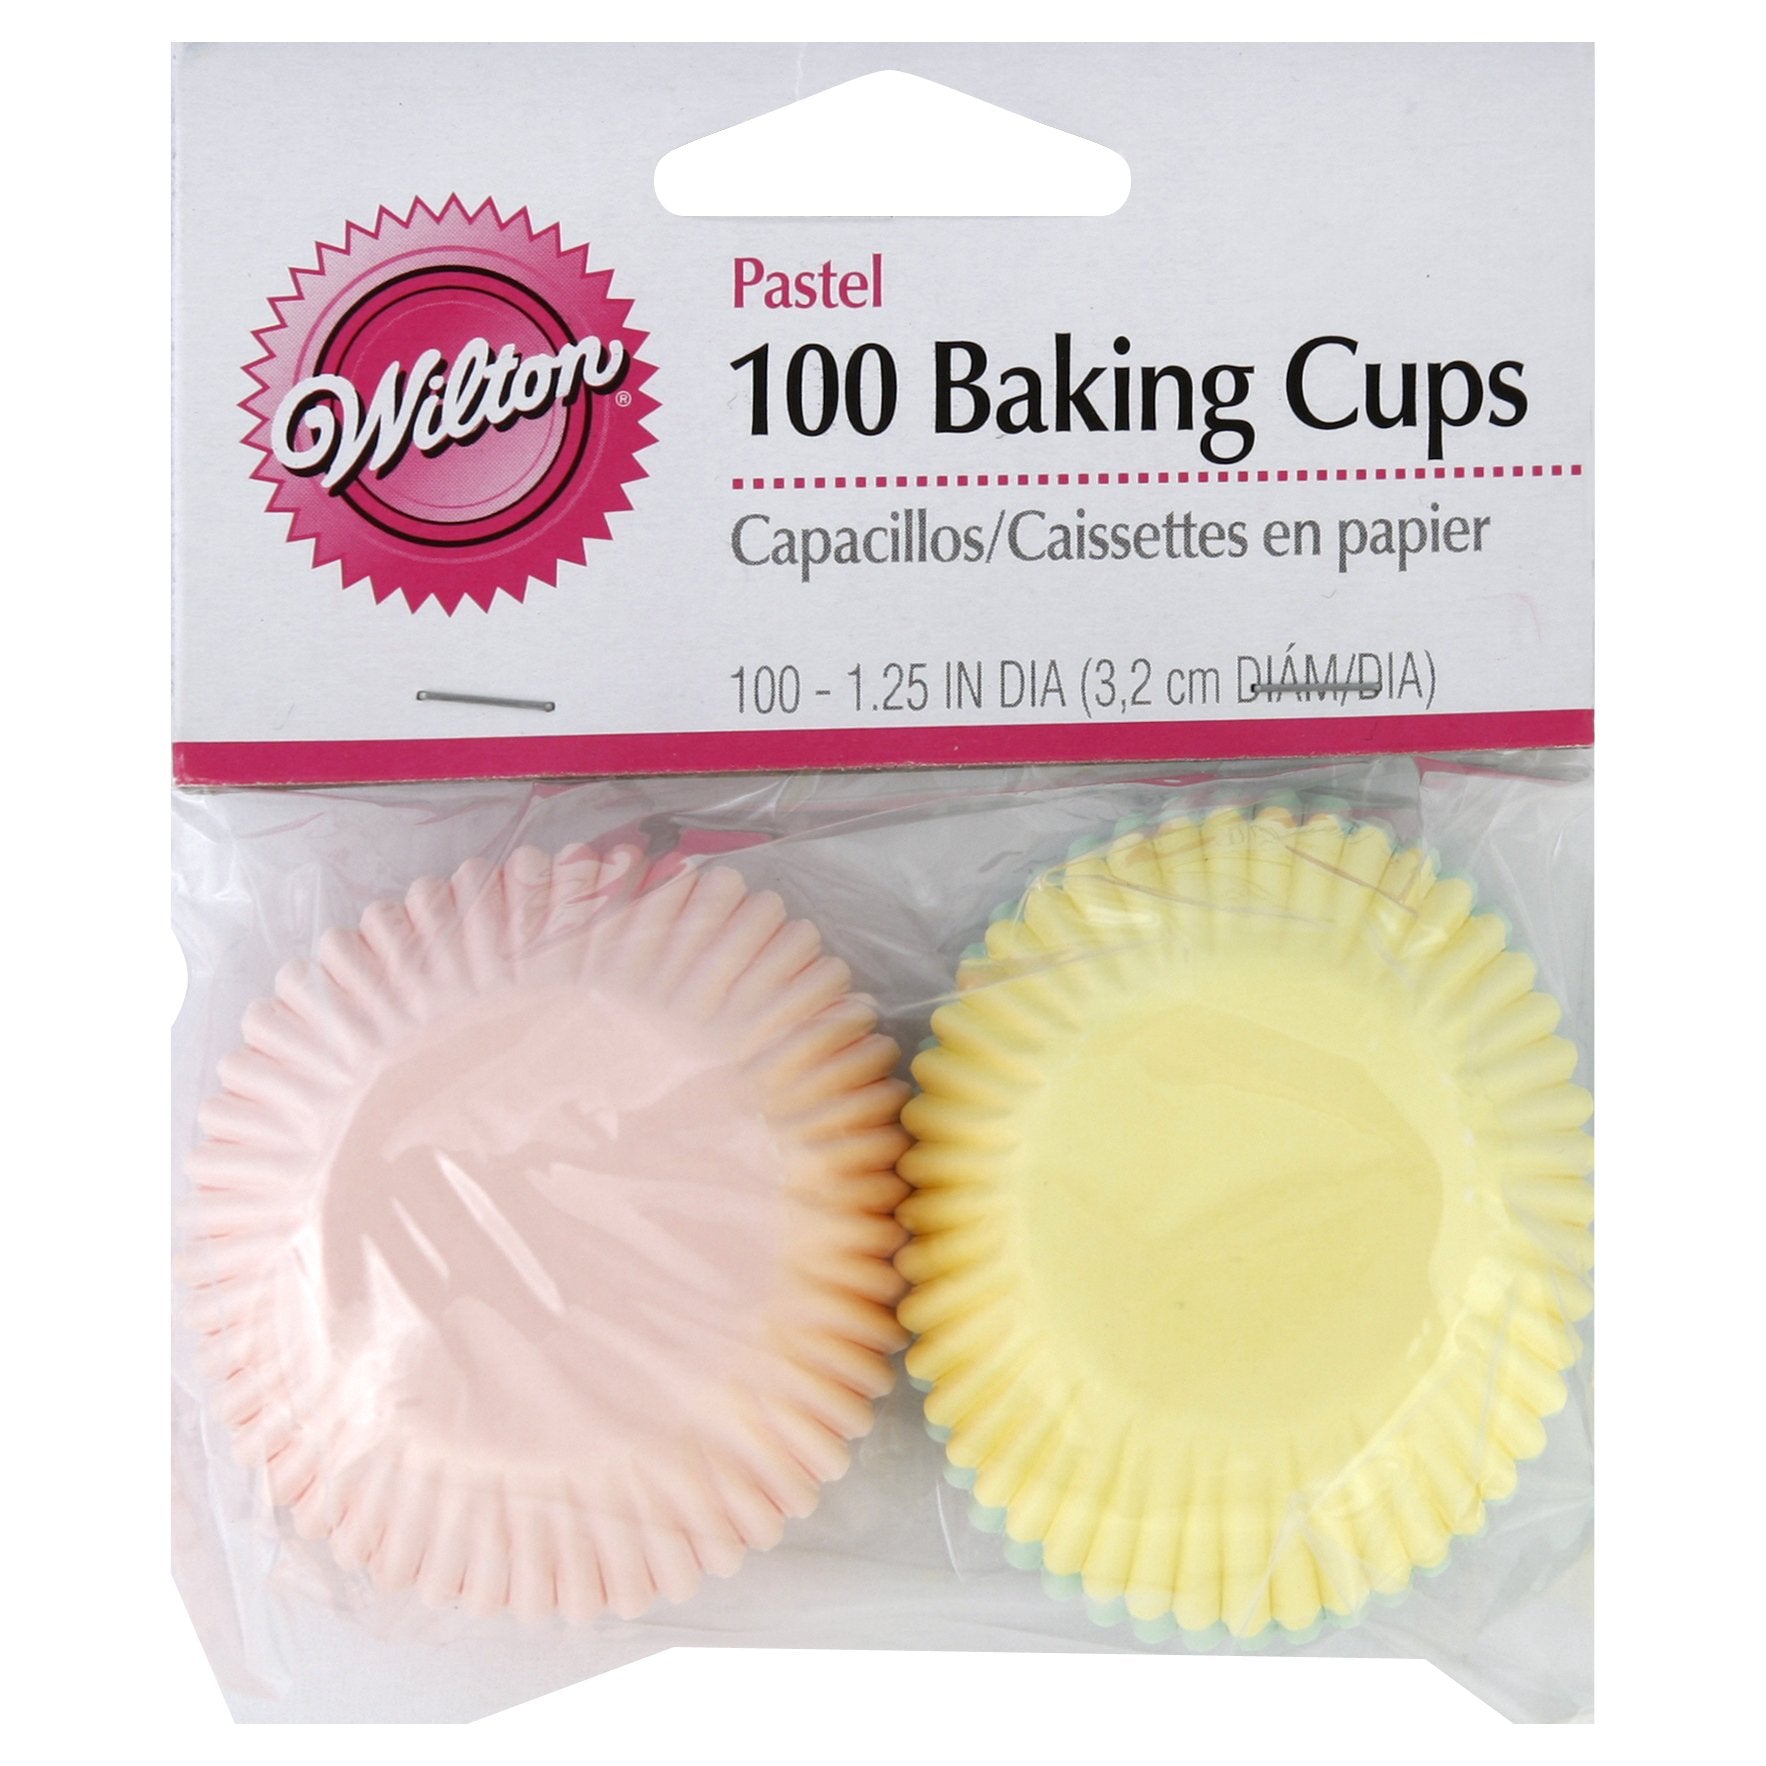 Reynold Pastel Baking Cups